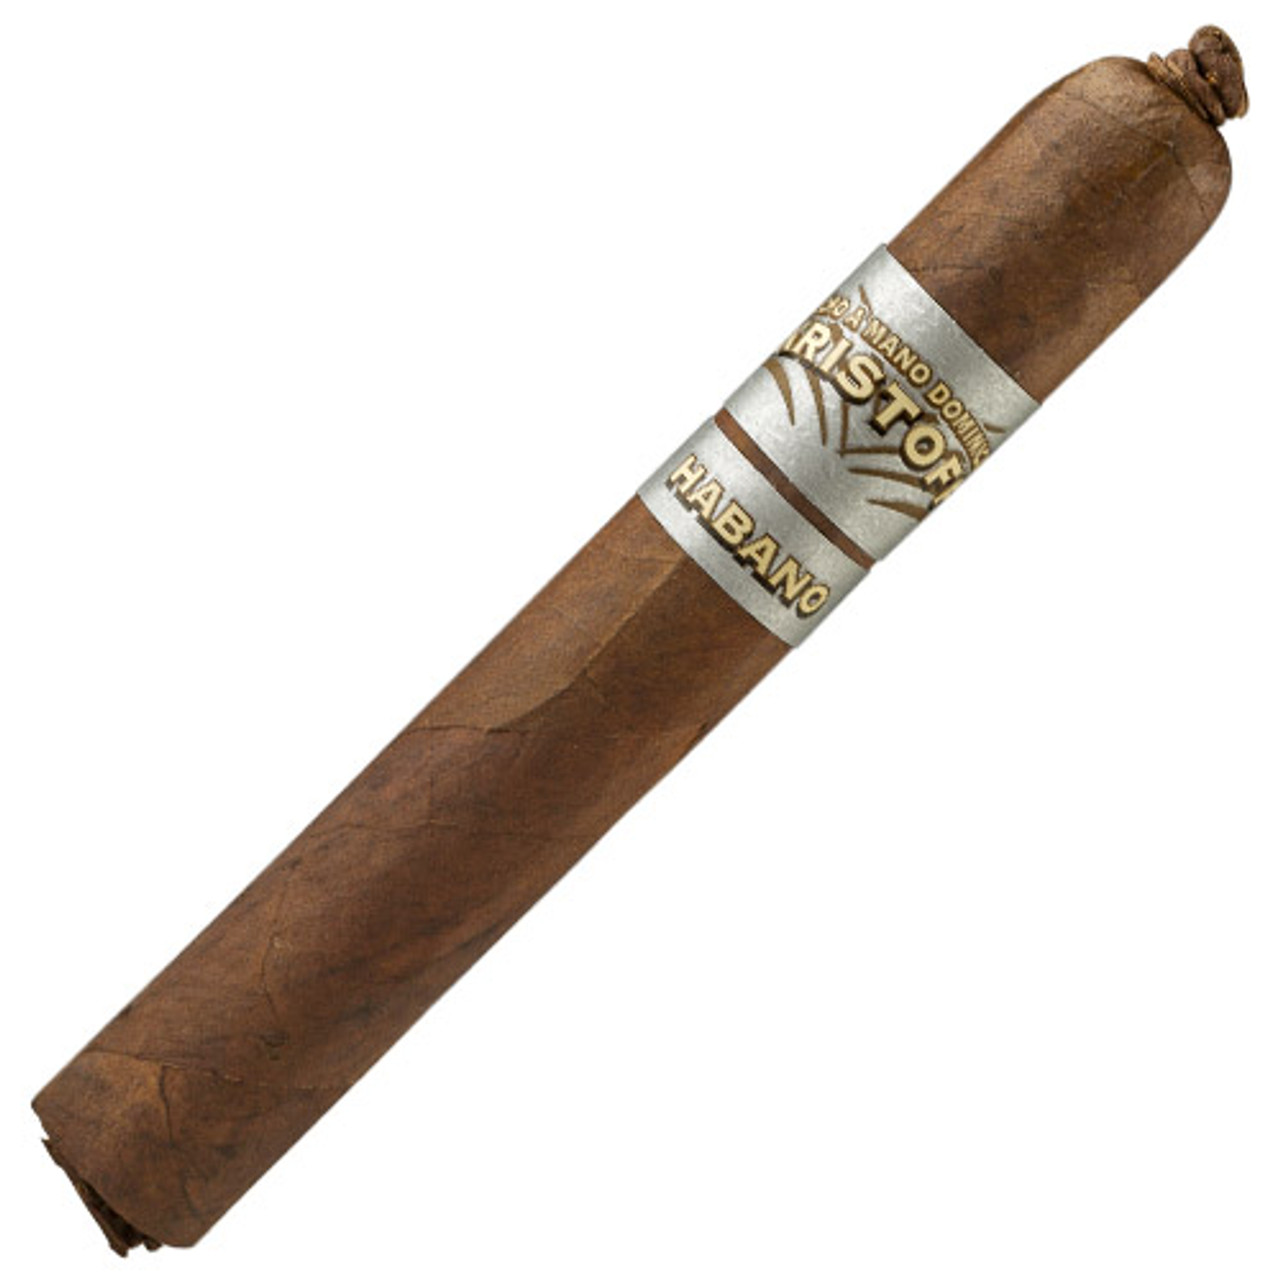 Kristoff Habano Robusto Cigars - 5.5 x 54 (Box of 20)